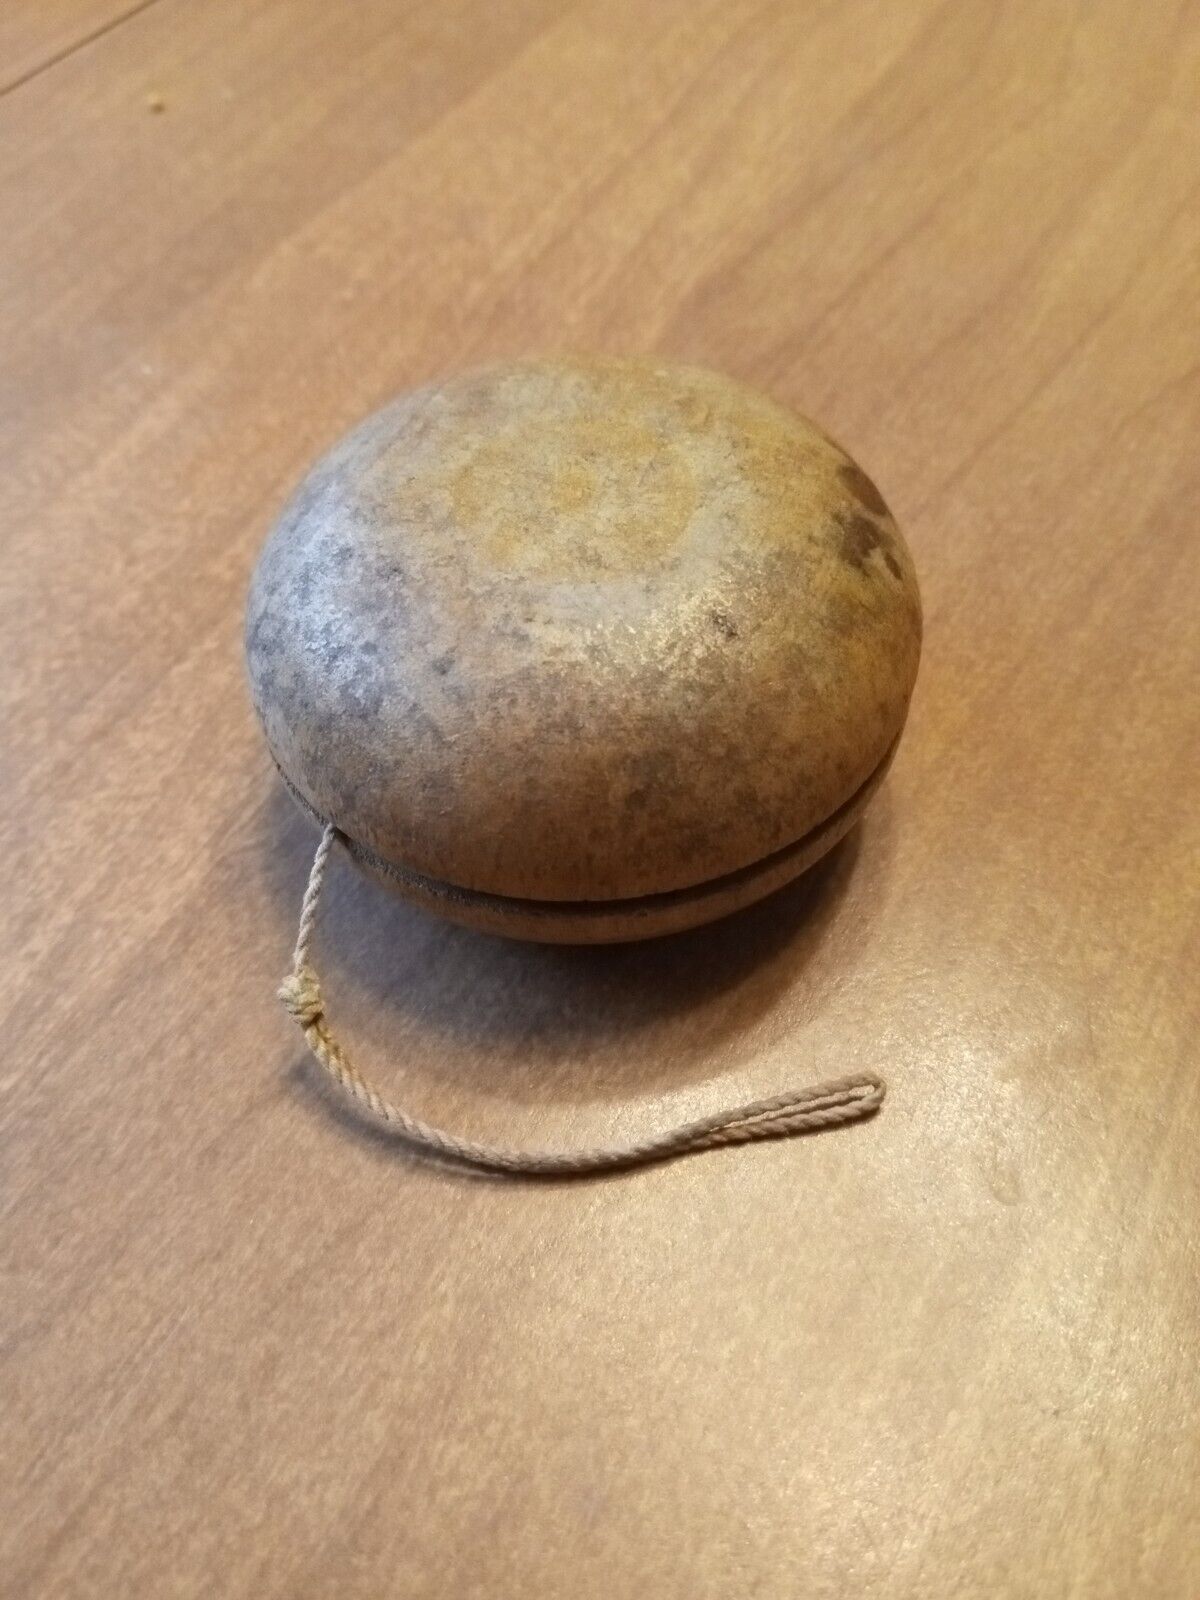 Vintage Wooden Yo-yo Very Old Still Works Great!